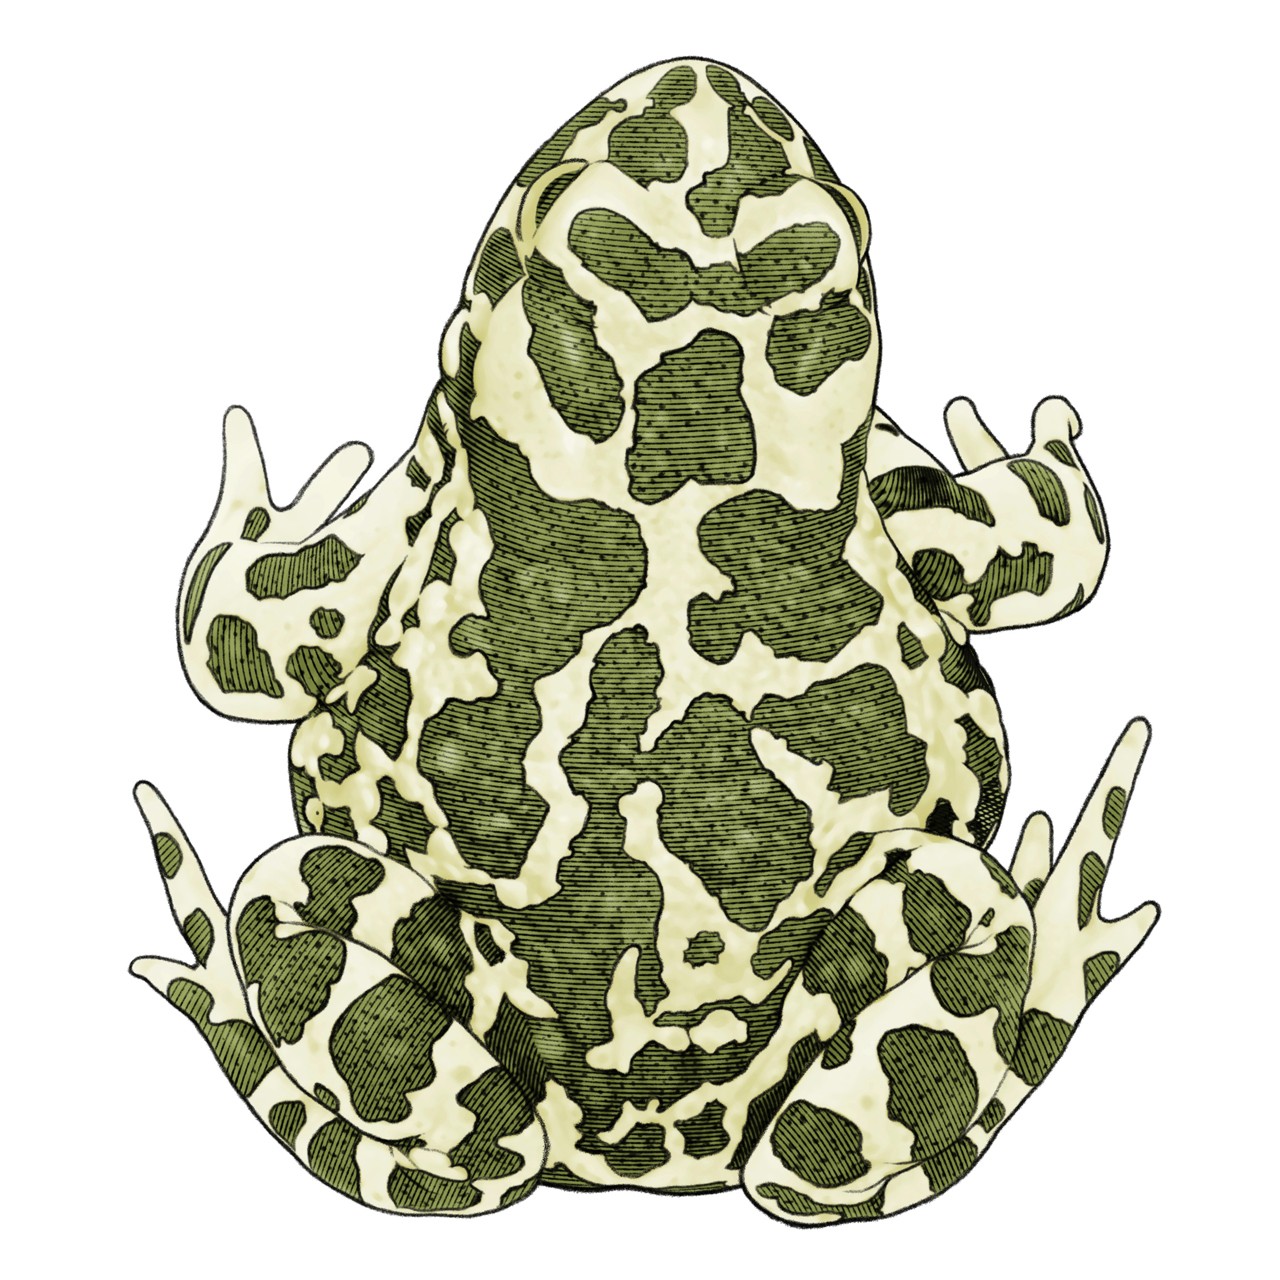 Green toad for Rörstrand and Prince Carl Philip series of decorative porcelain. Grönfläckig padda groda